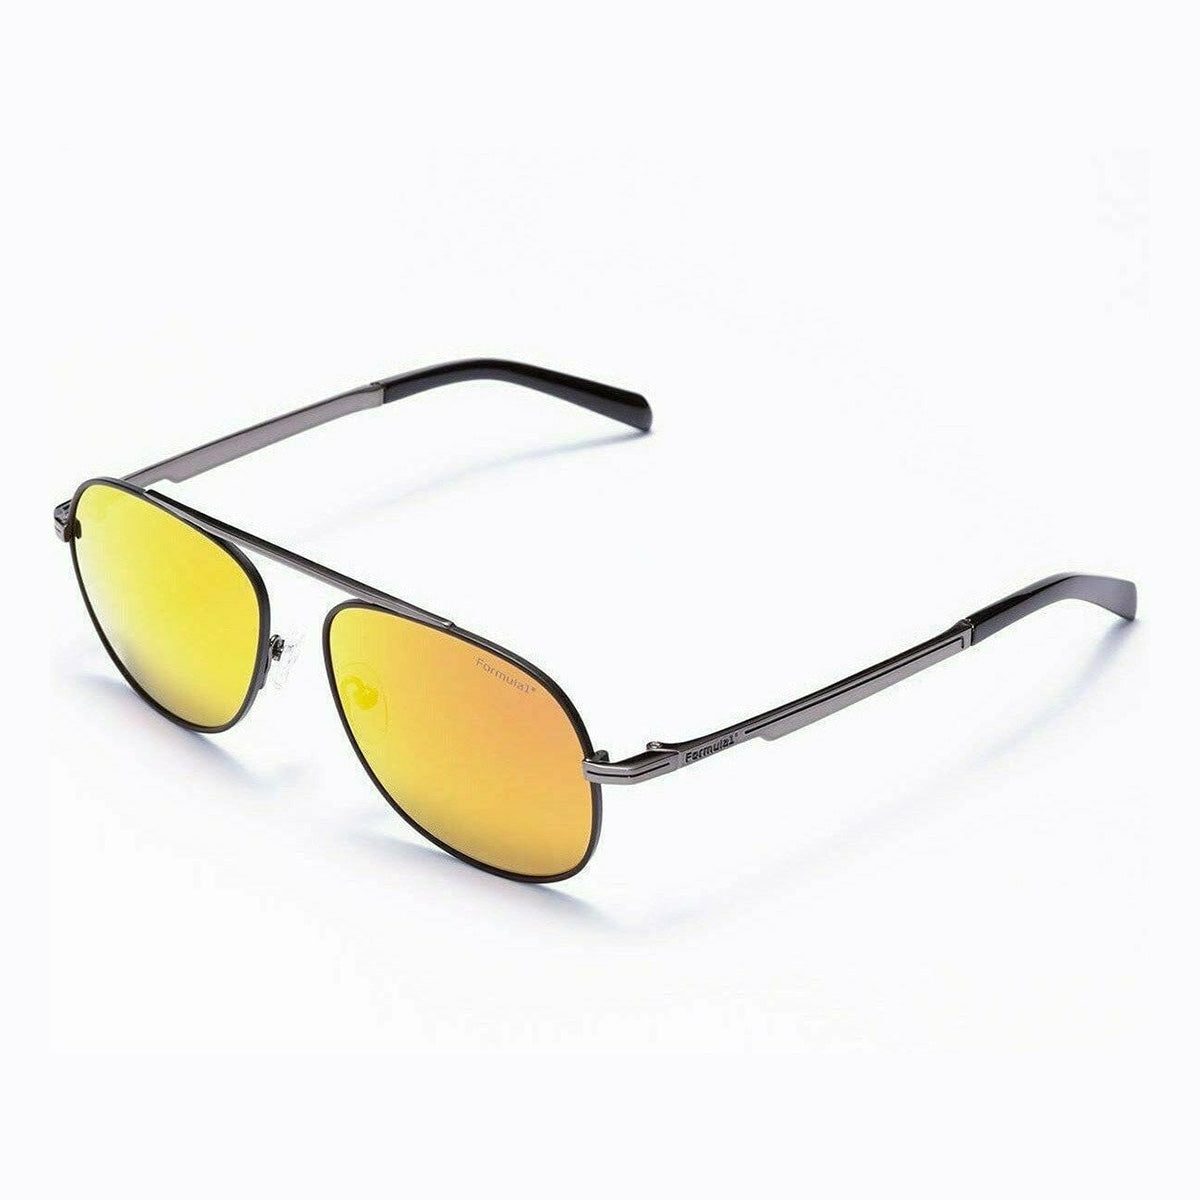 Formula 1 Eyewear Red Collection Unisex Sunglasses - Blind Curve Gun Black